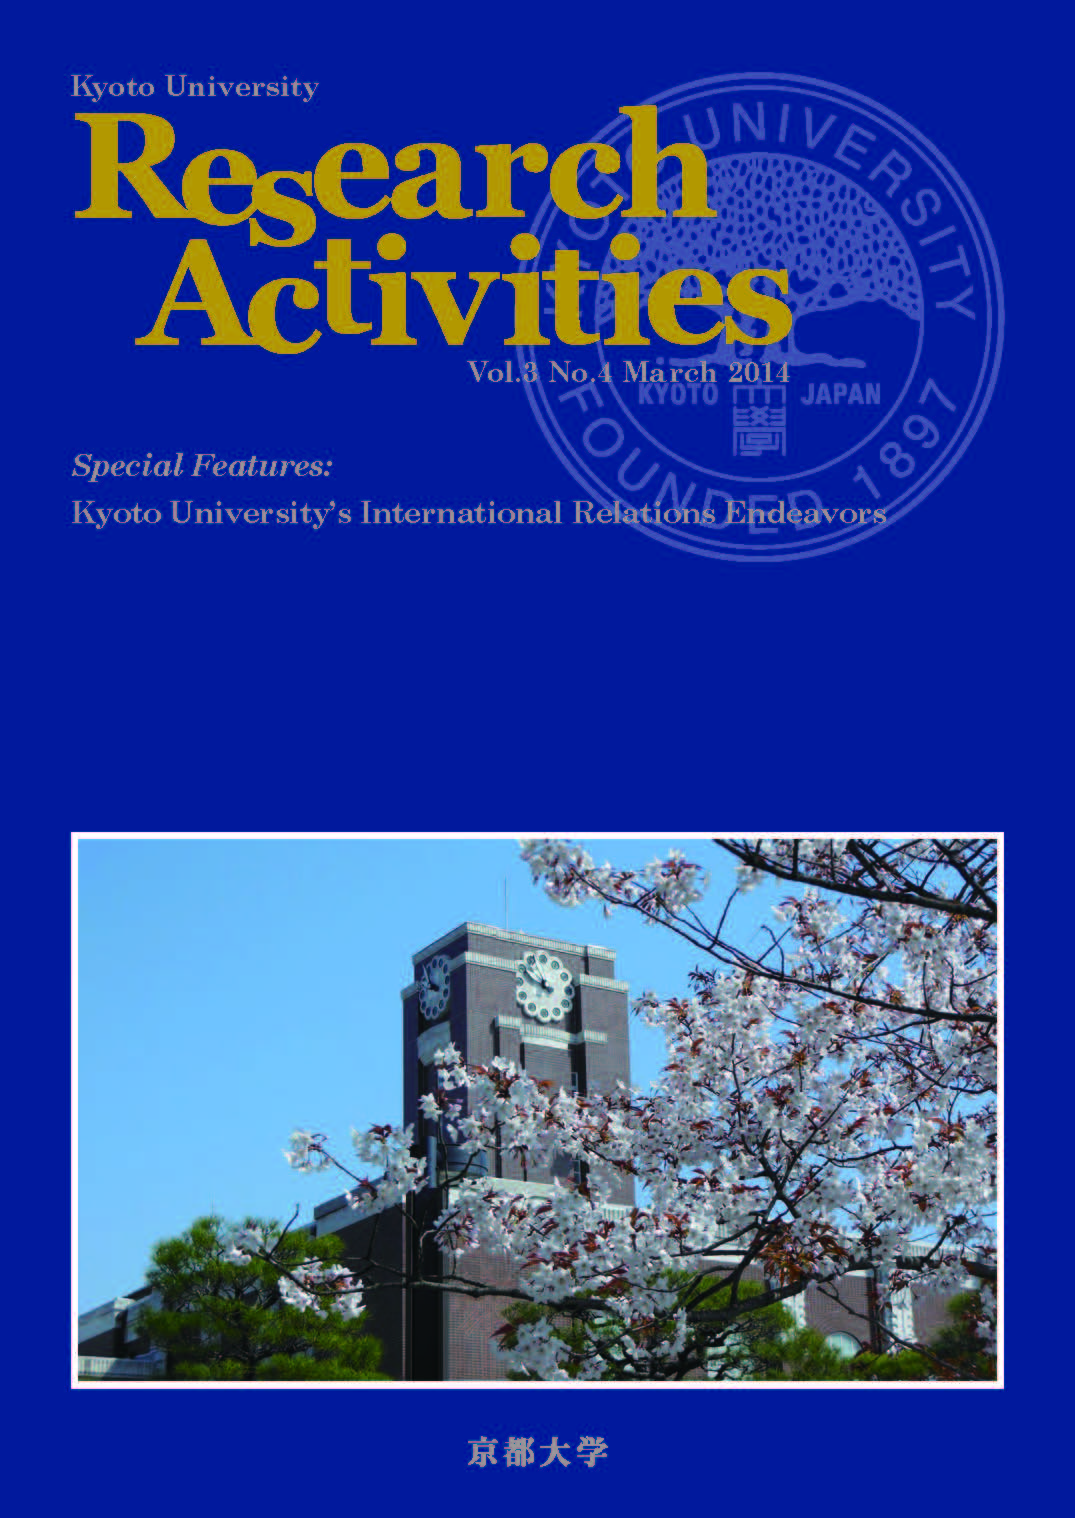 Kyoto University Research Activities Vol.3 No.4 March 2014